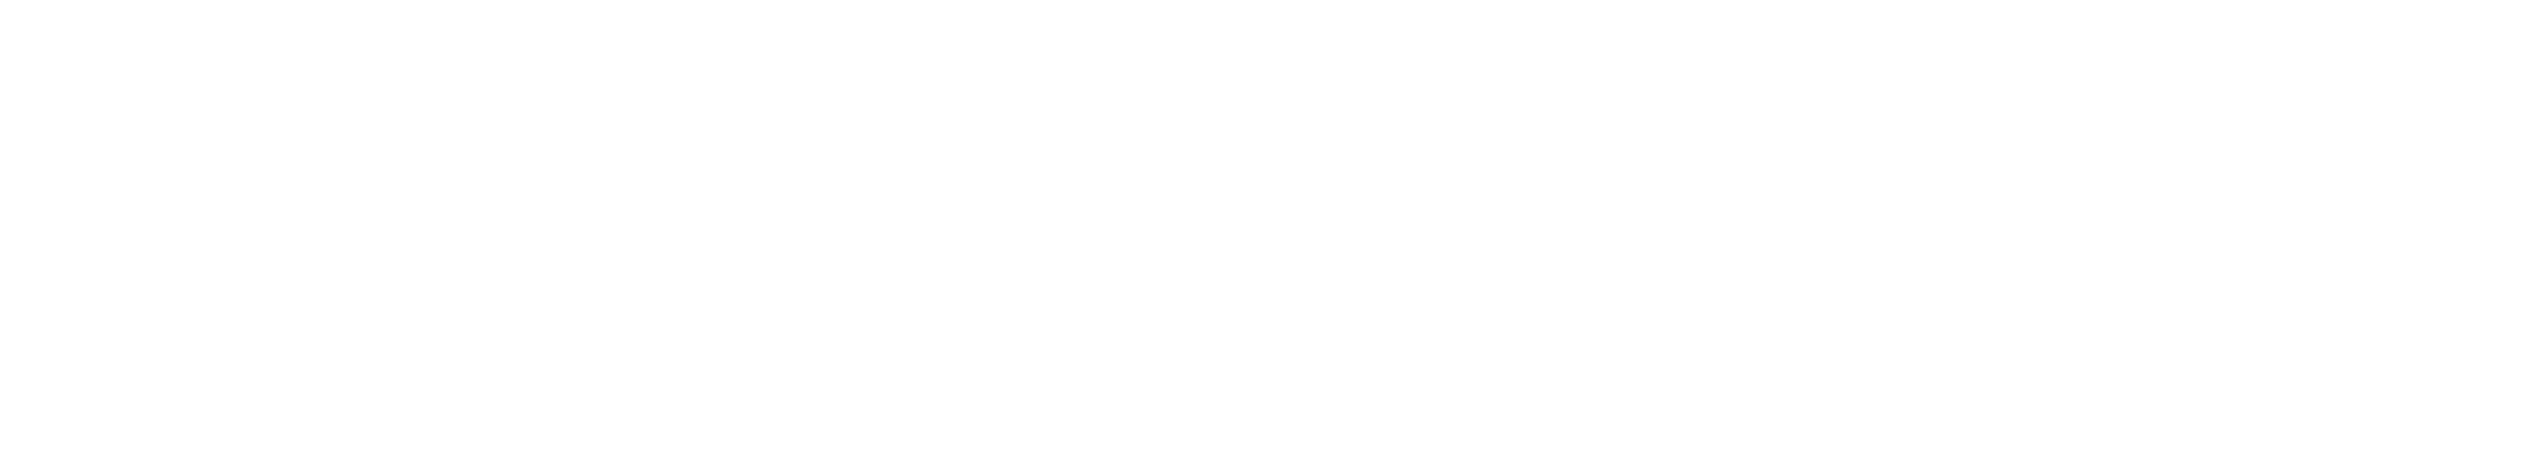 BCB Logo, Address, and Links